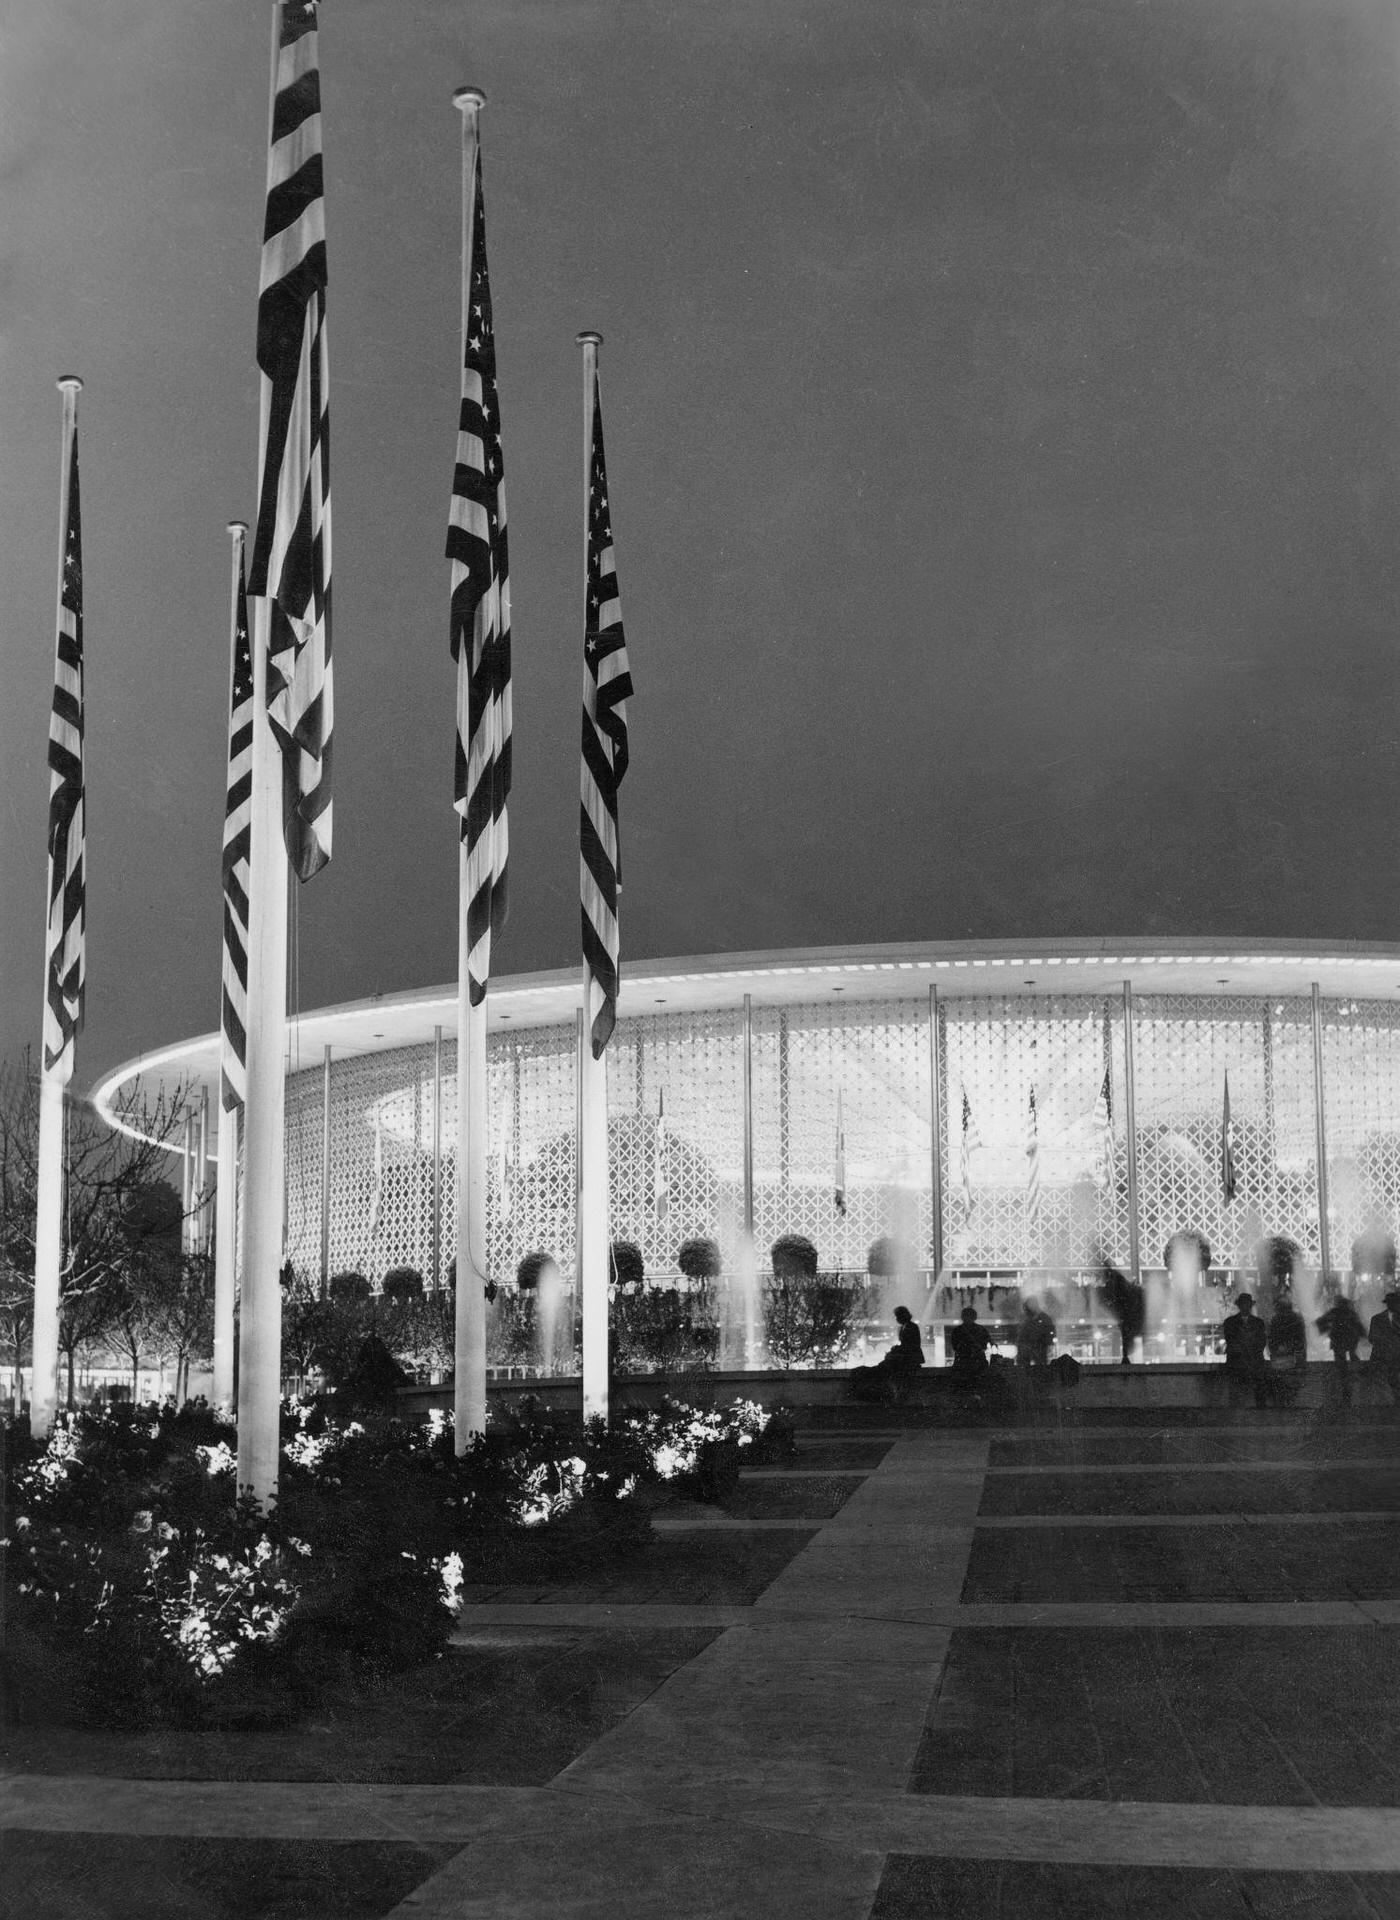 American Pavilion by night, Architect Edward Durell Stone